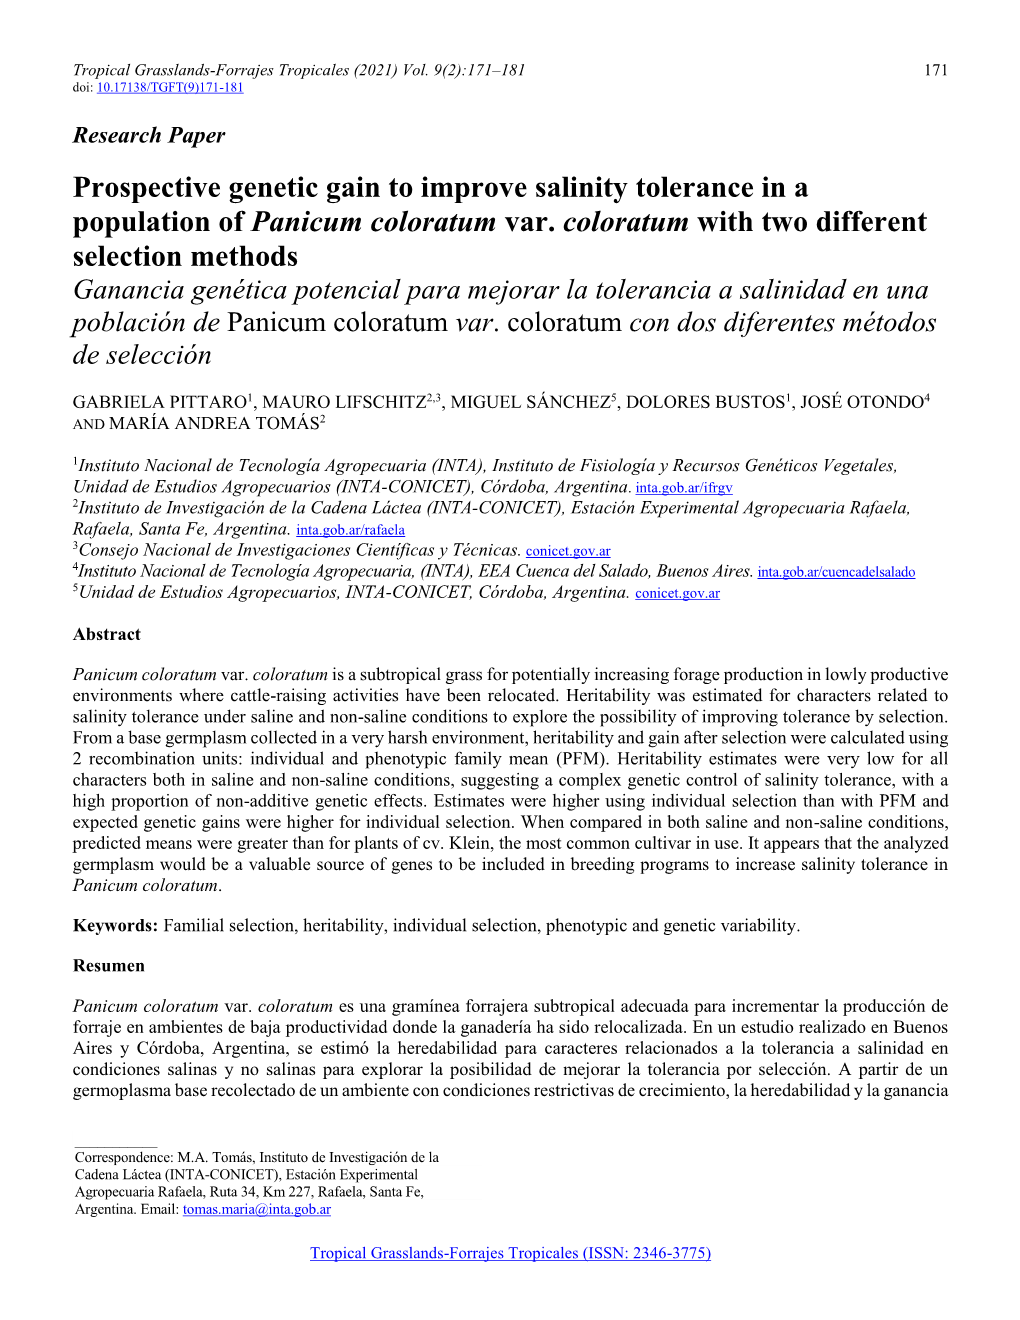 Prospective Genetic Gain to Improve Salinity Tolerance in a Population of Panicum Coloratum Var